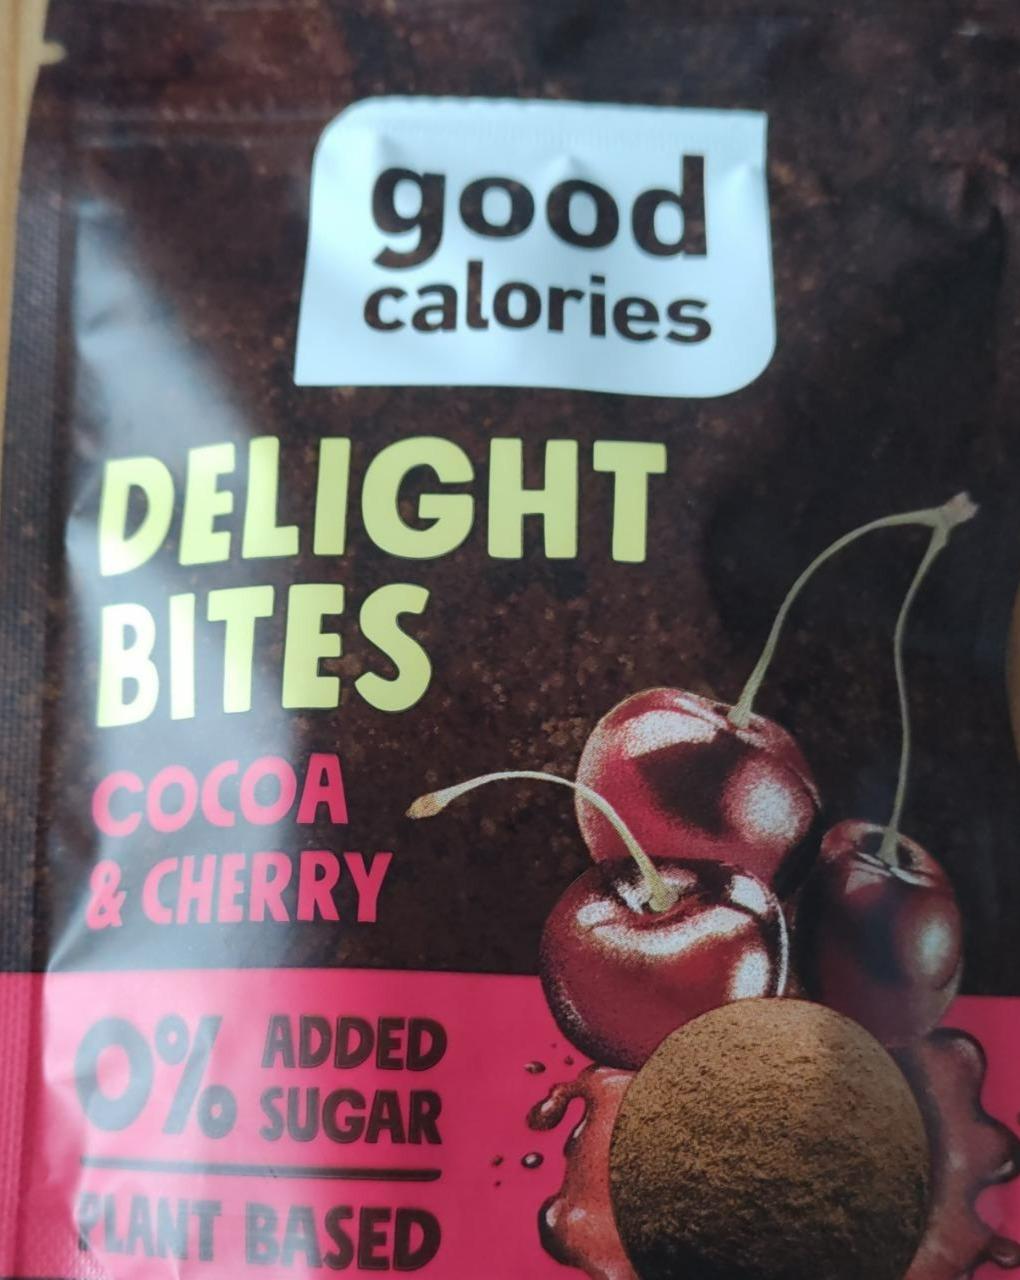 Fotografie - Delight bites cocoa & cherry Good calories